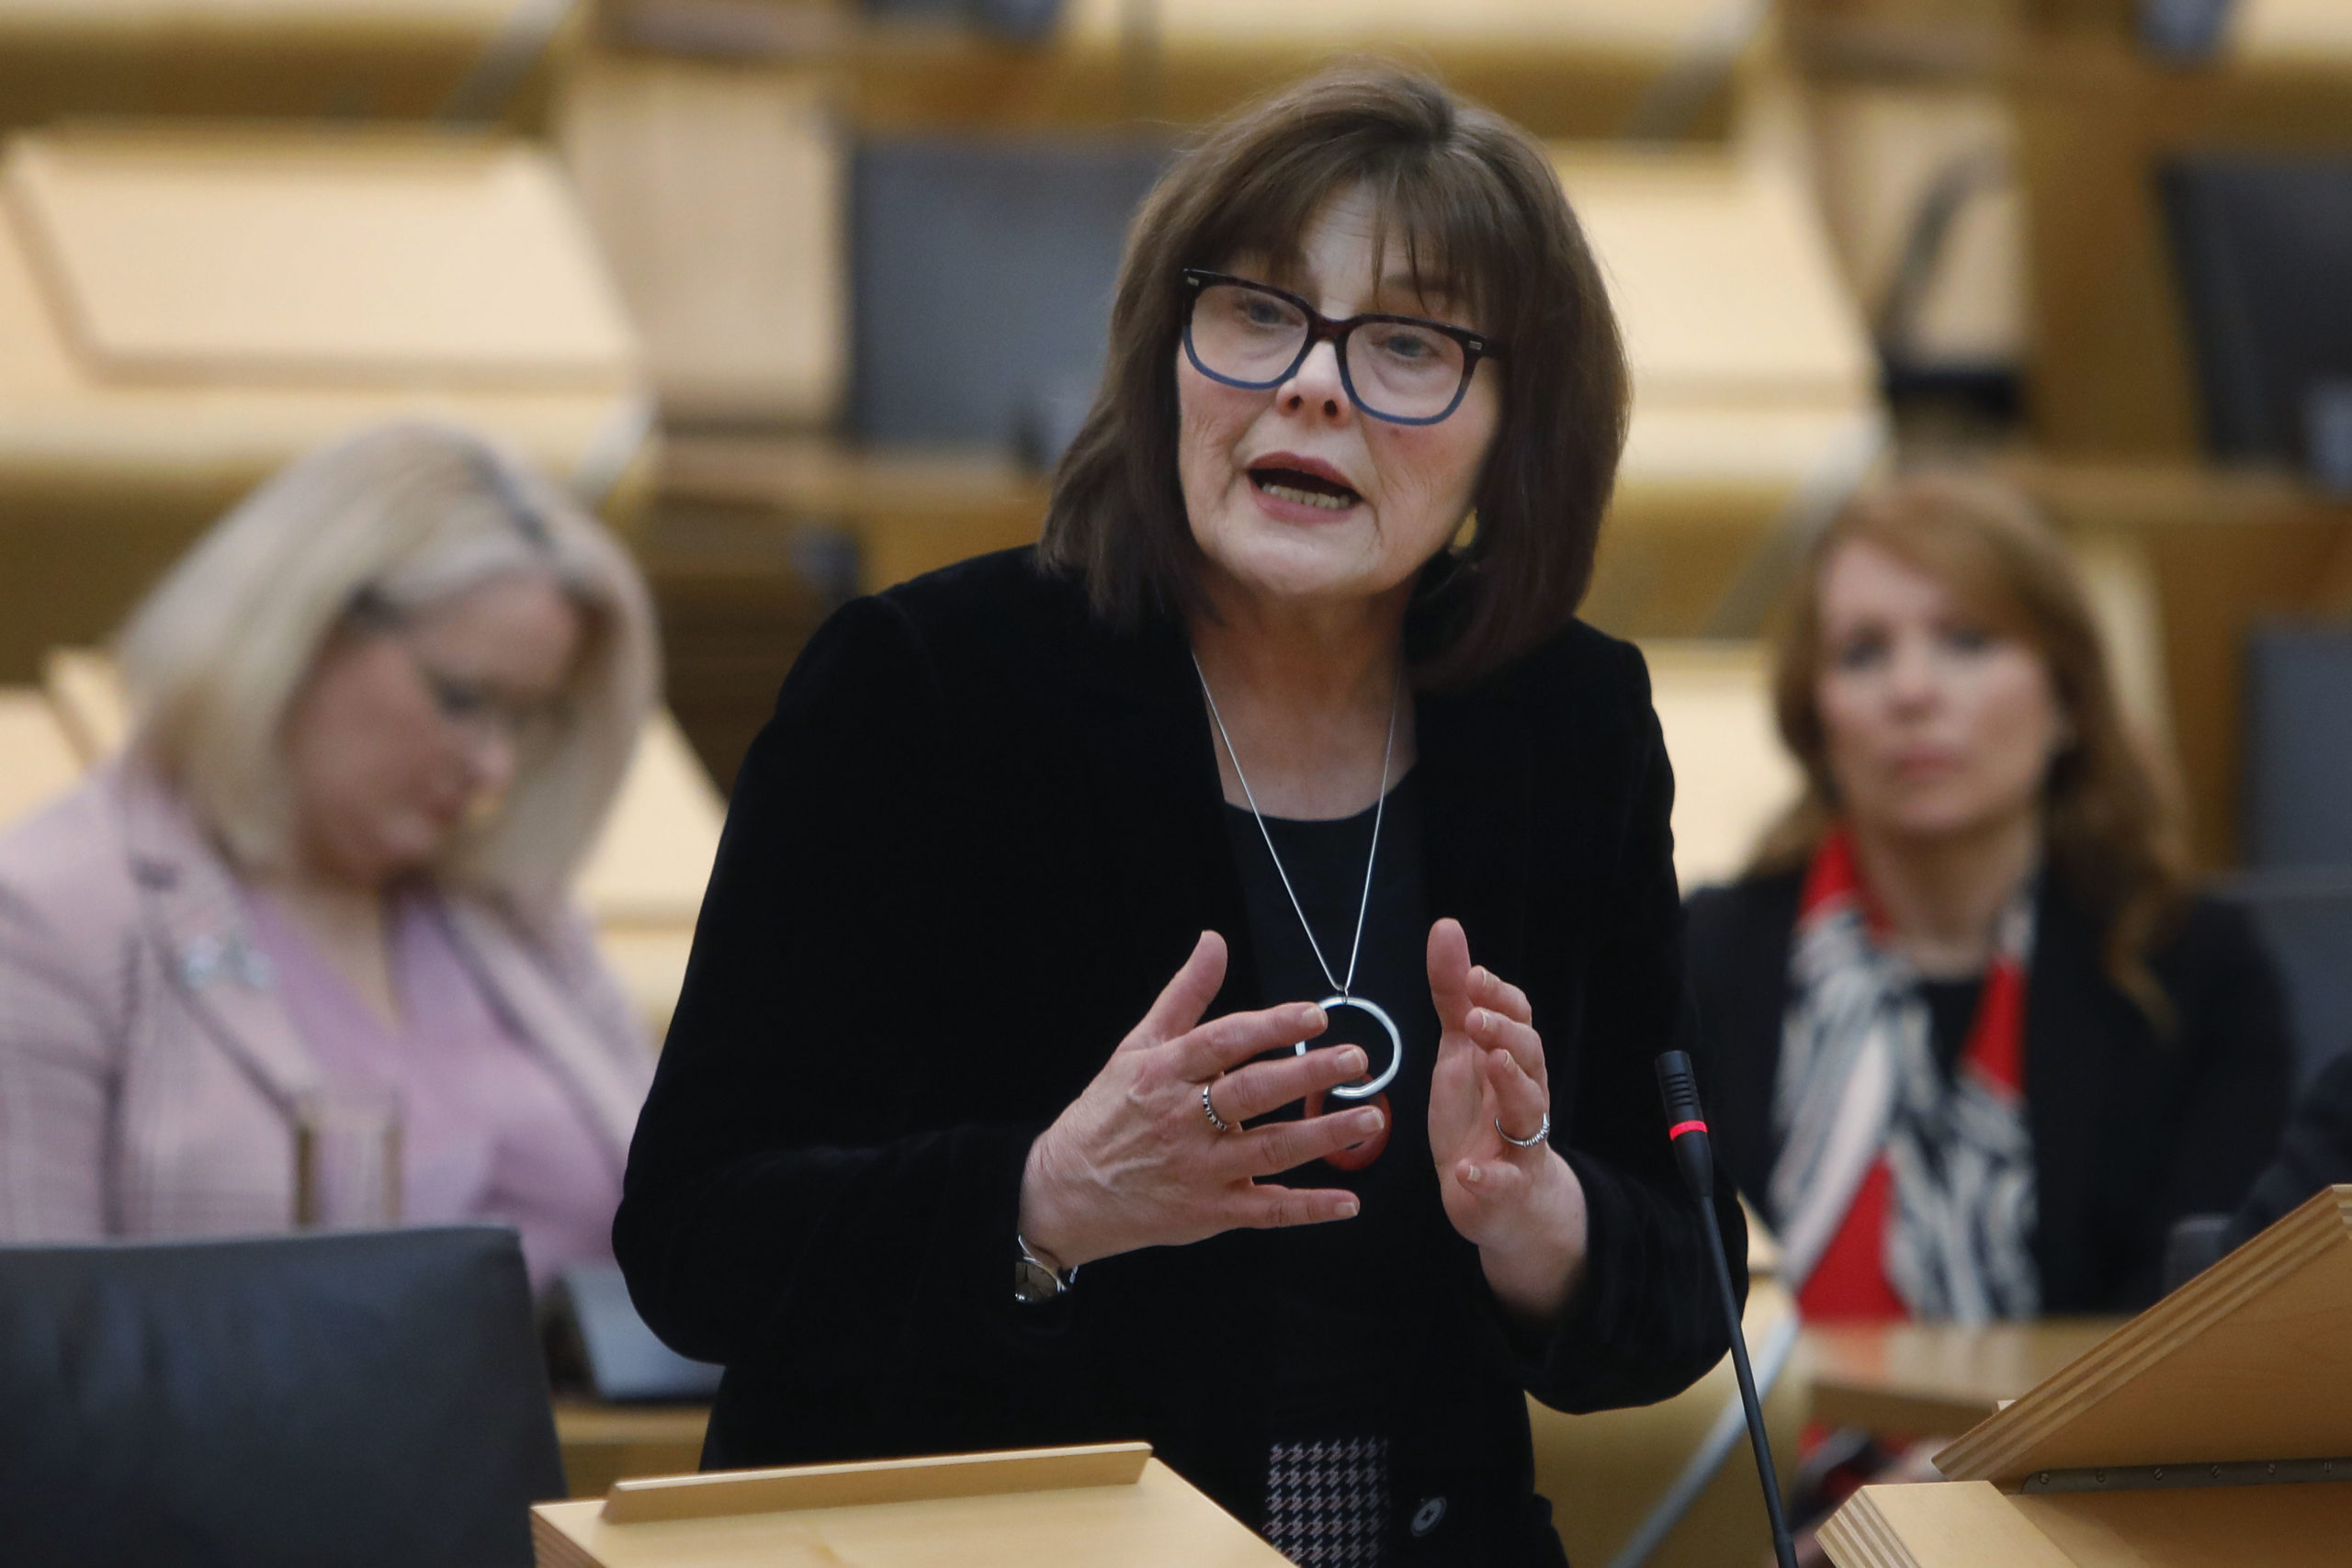 Jeane Freeman makes a ministerial statement to parliament on coronavirus.